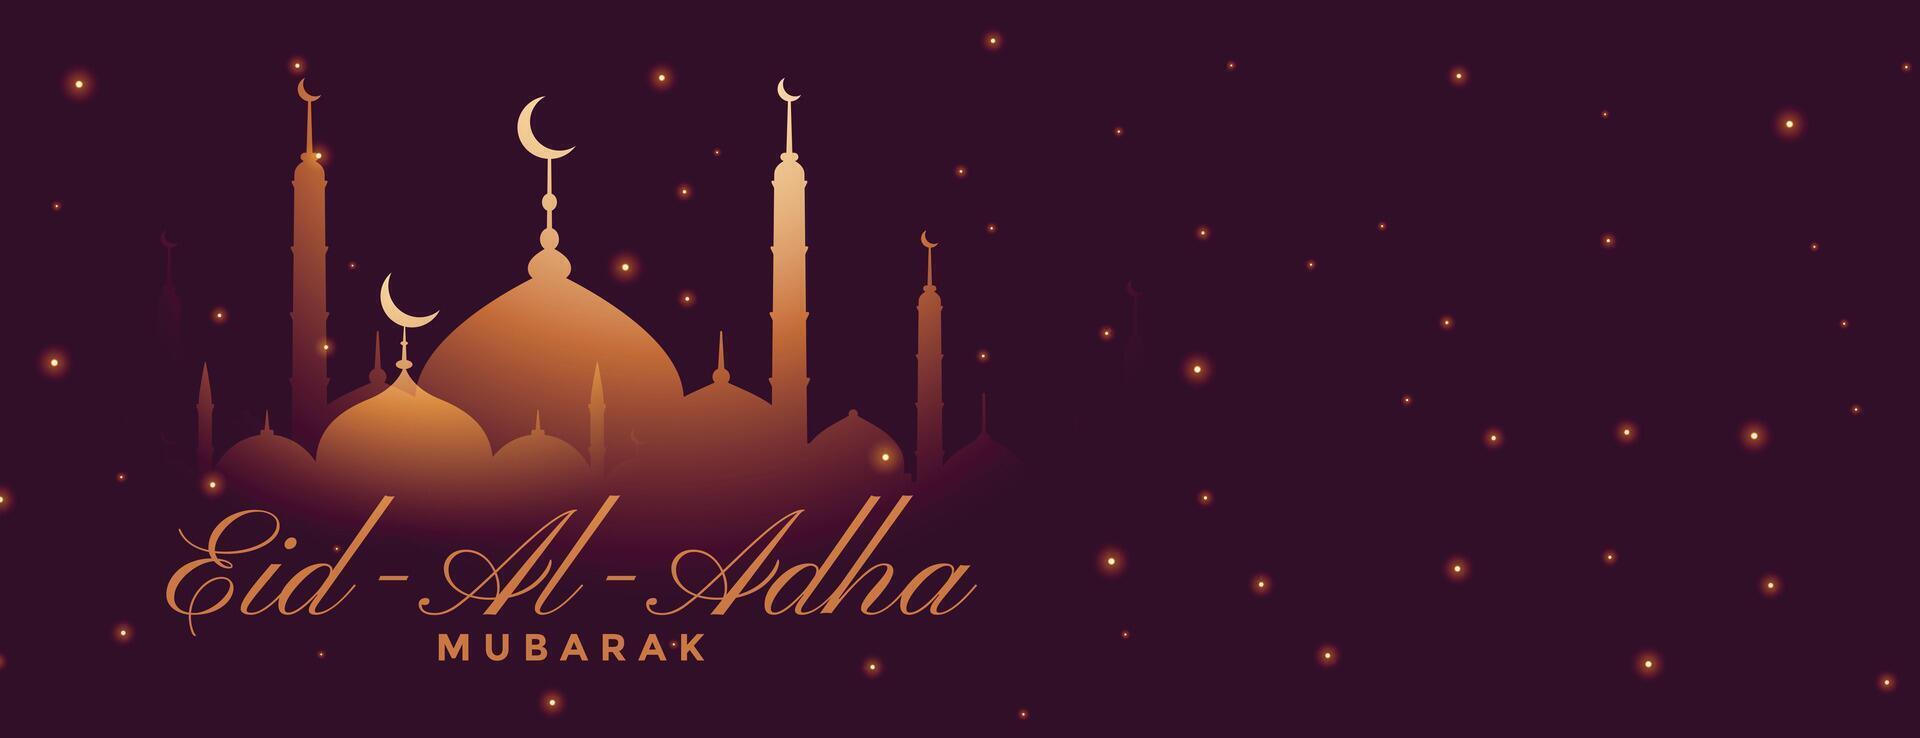 eid al adha Mubarak Festival Banner Design vektor